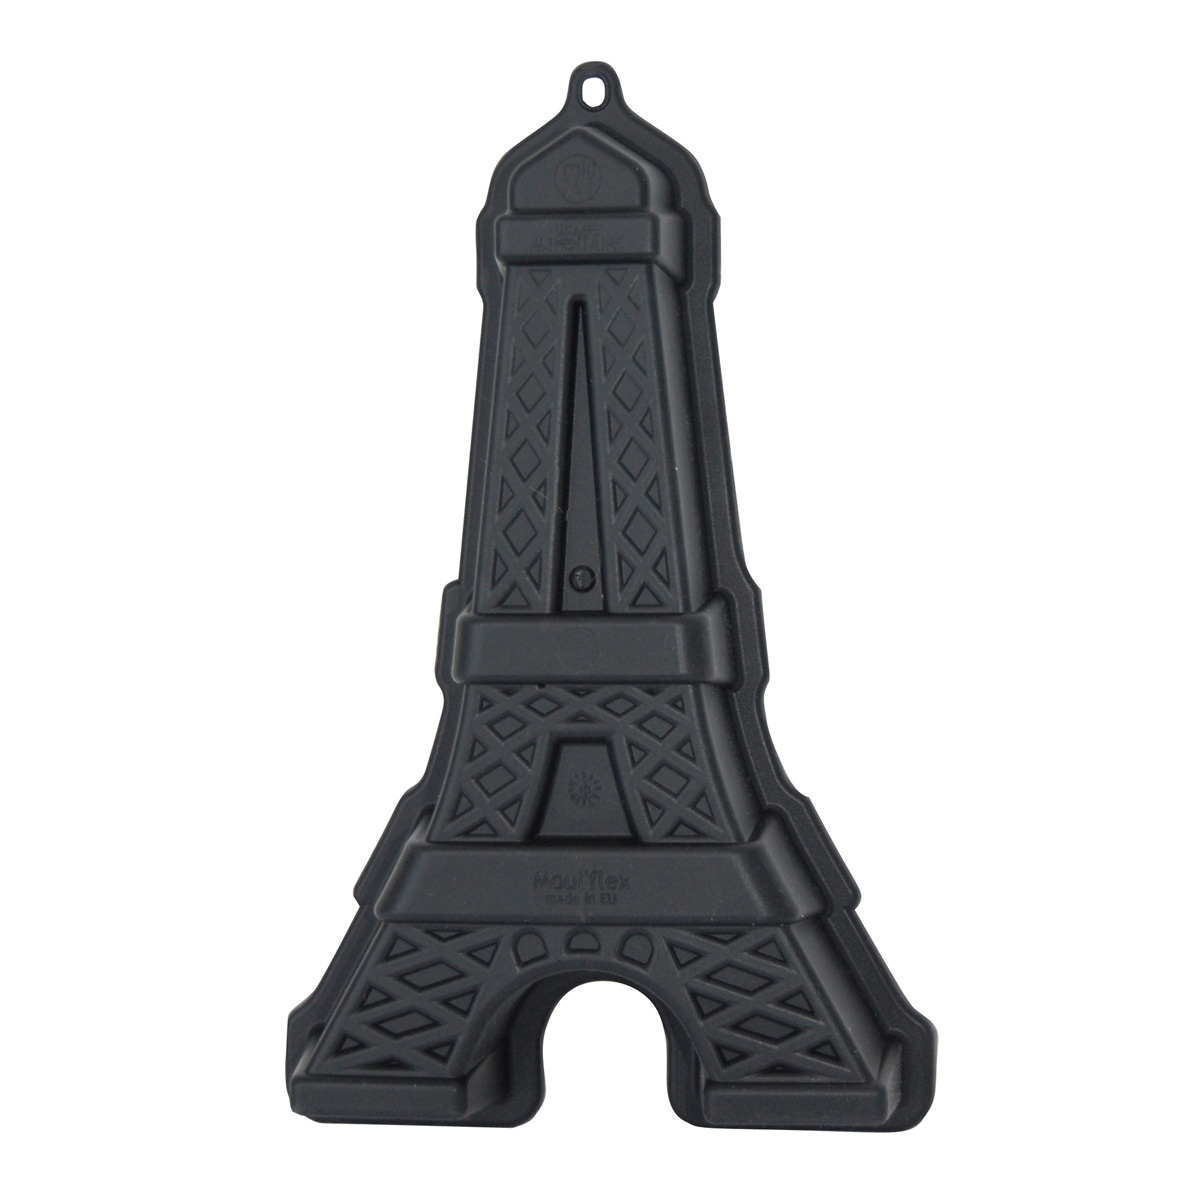 de Buyer Moulflex Silikon Eiffel Turm Form / mit Antihaft-Eigenschaften